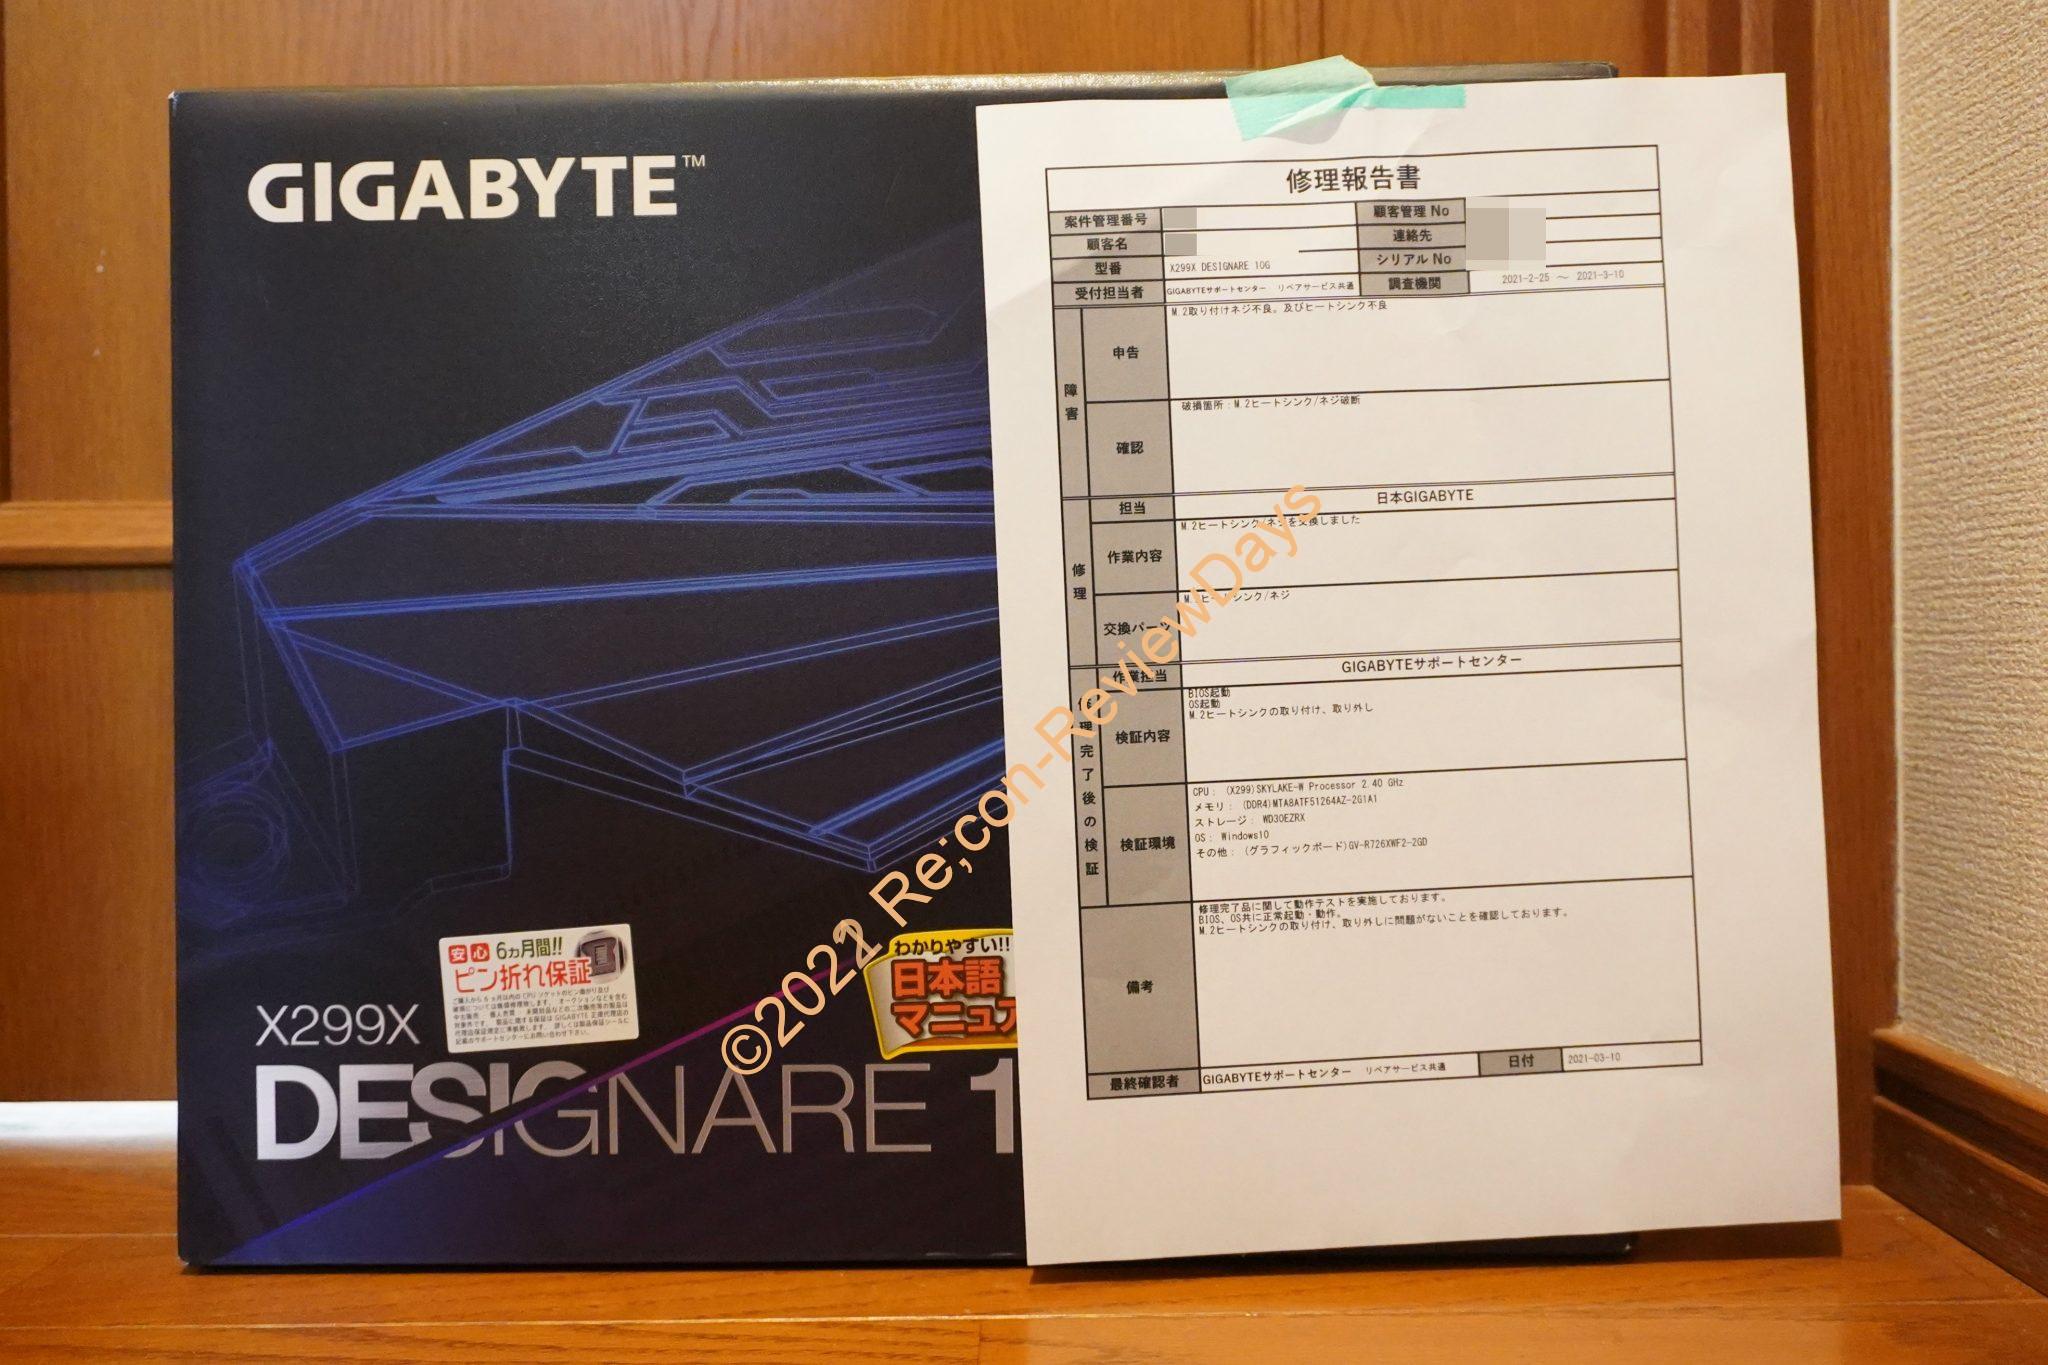 M.2のネジが破断し修理に出していたGIGABYTE製のマザーボード「X299X DESIGNARE 10G」が帰ってきました #GIGABYTE #X299XDESIGNARE10G